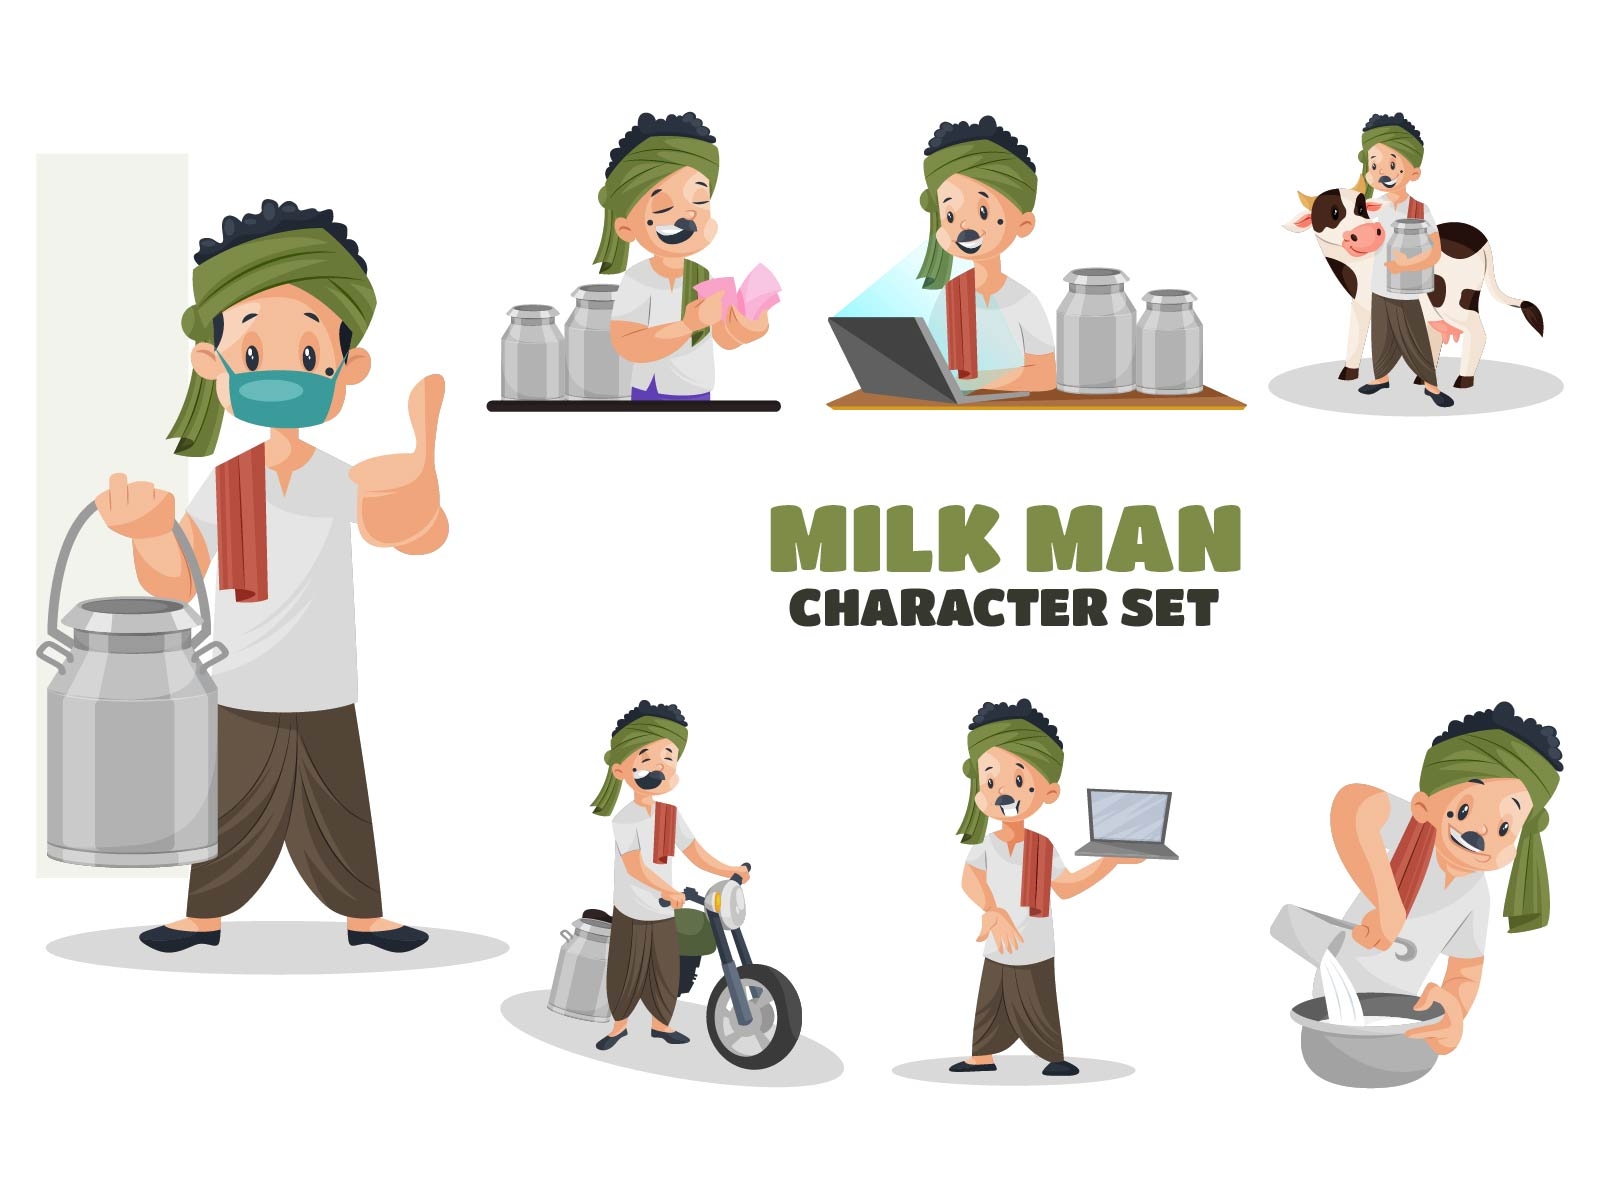 Milkman Character Set by Creative Hatti on Dribbble